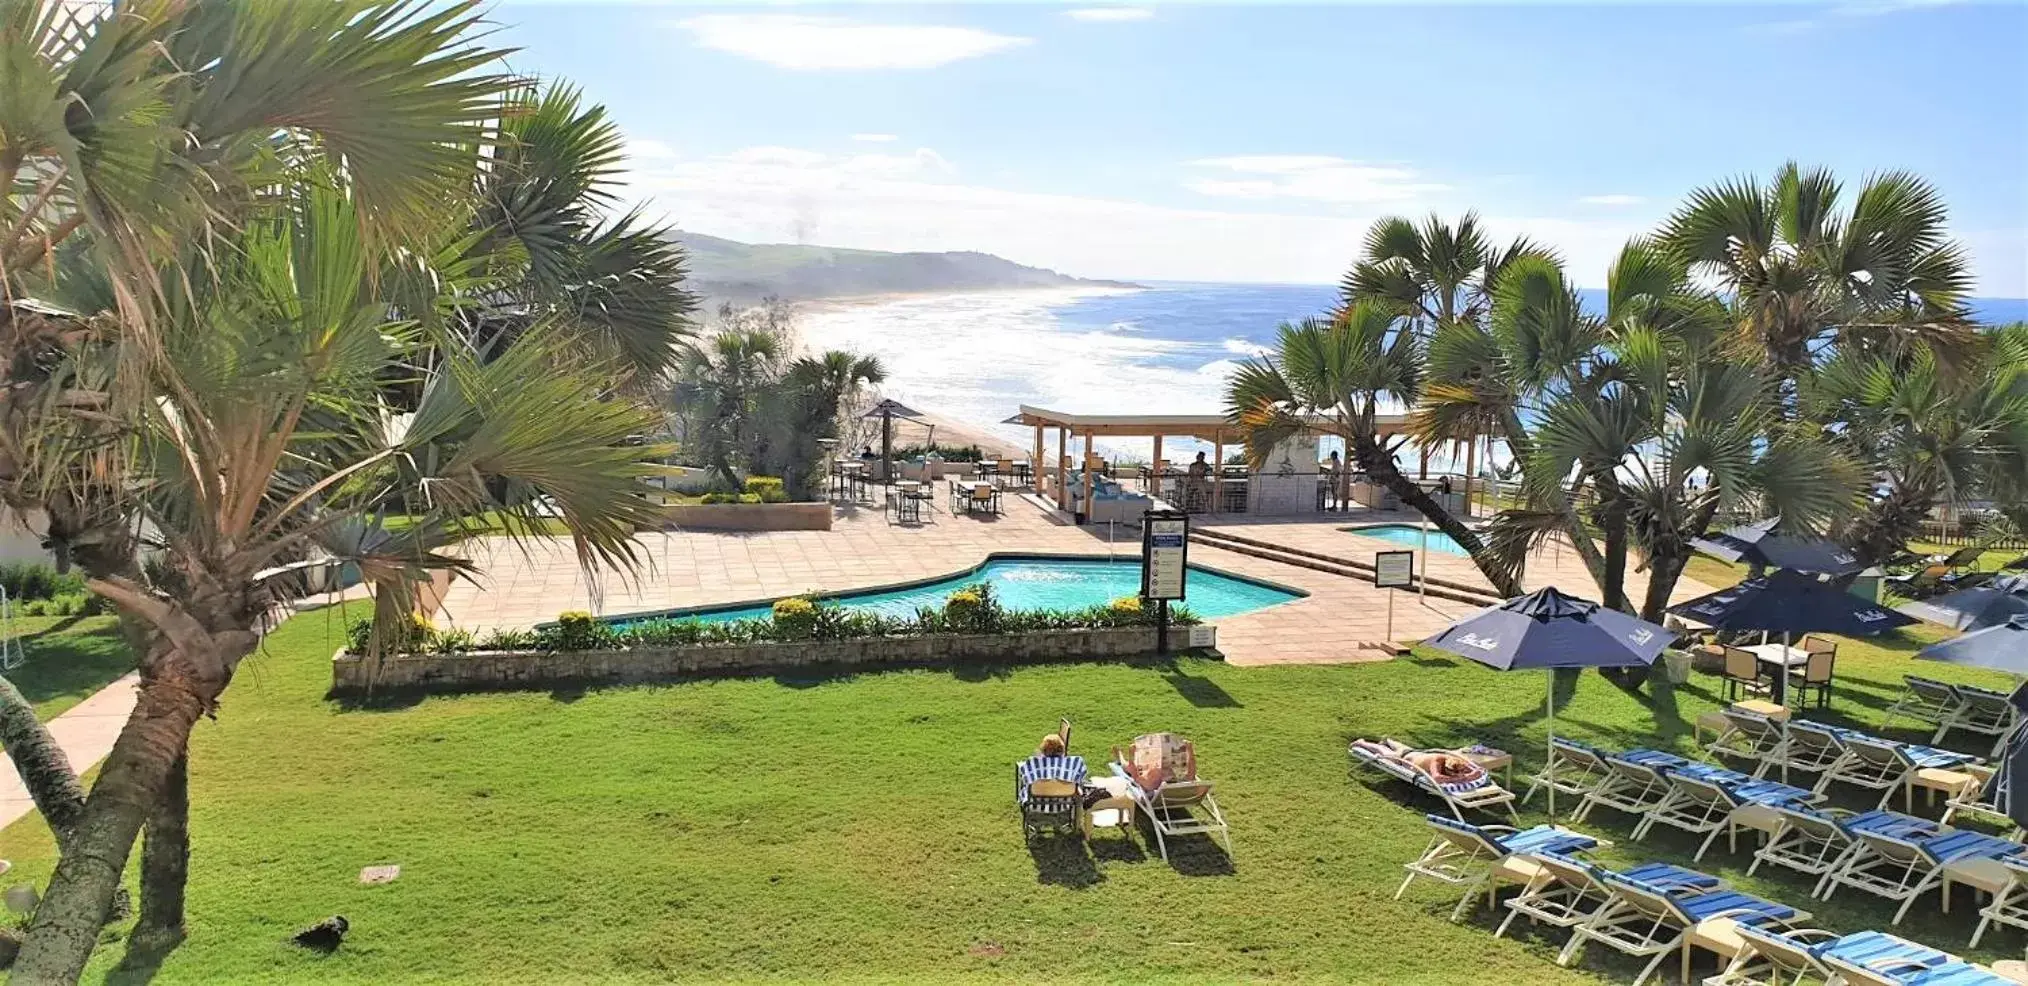 Nearby landmark, Pool View in Blue Marlin Hotel by Dream Resorts